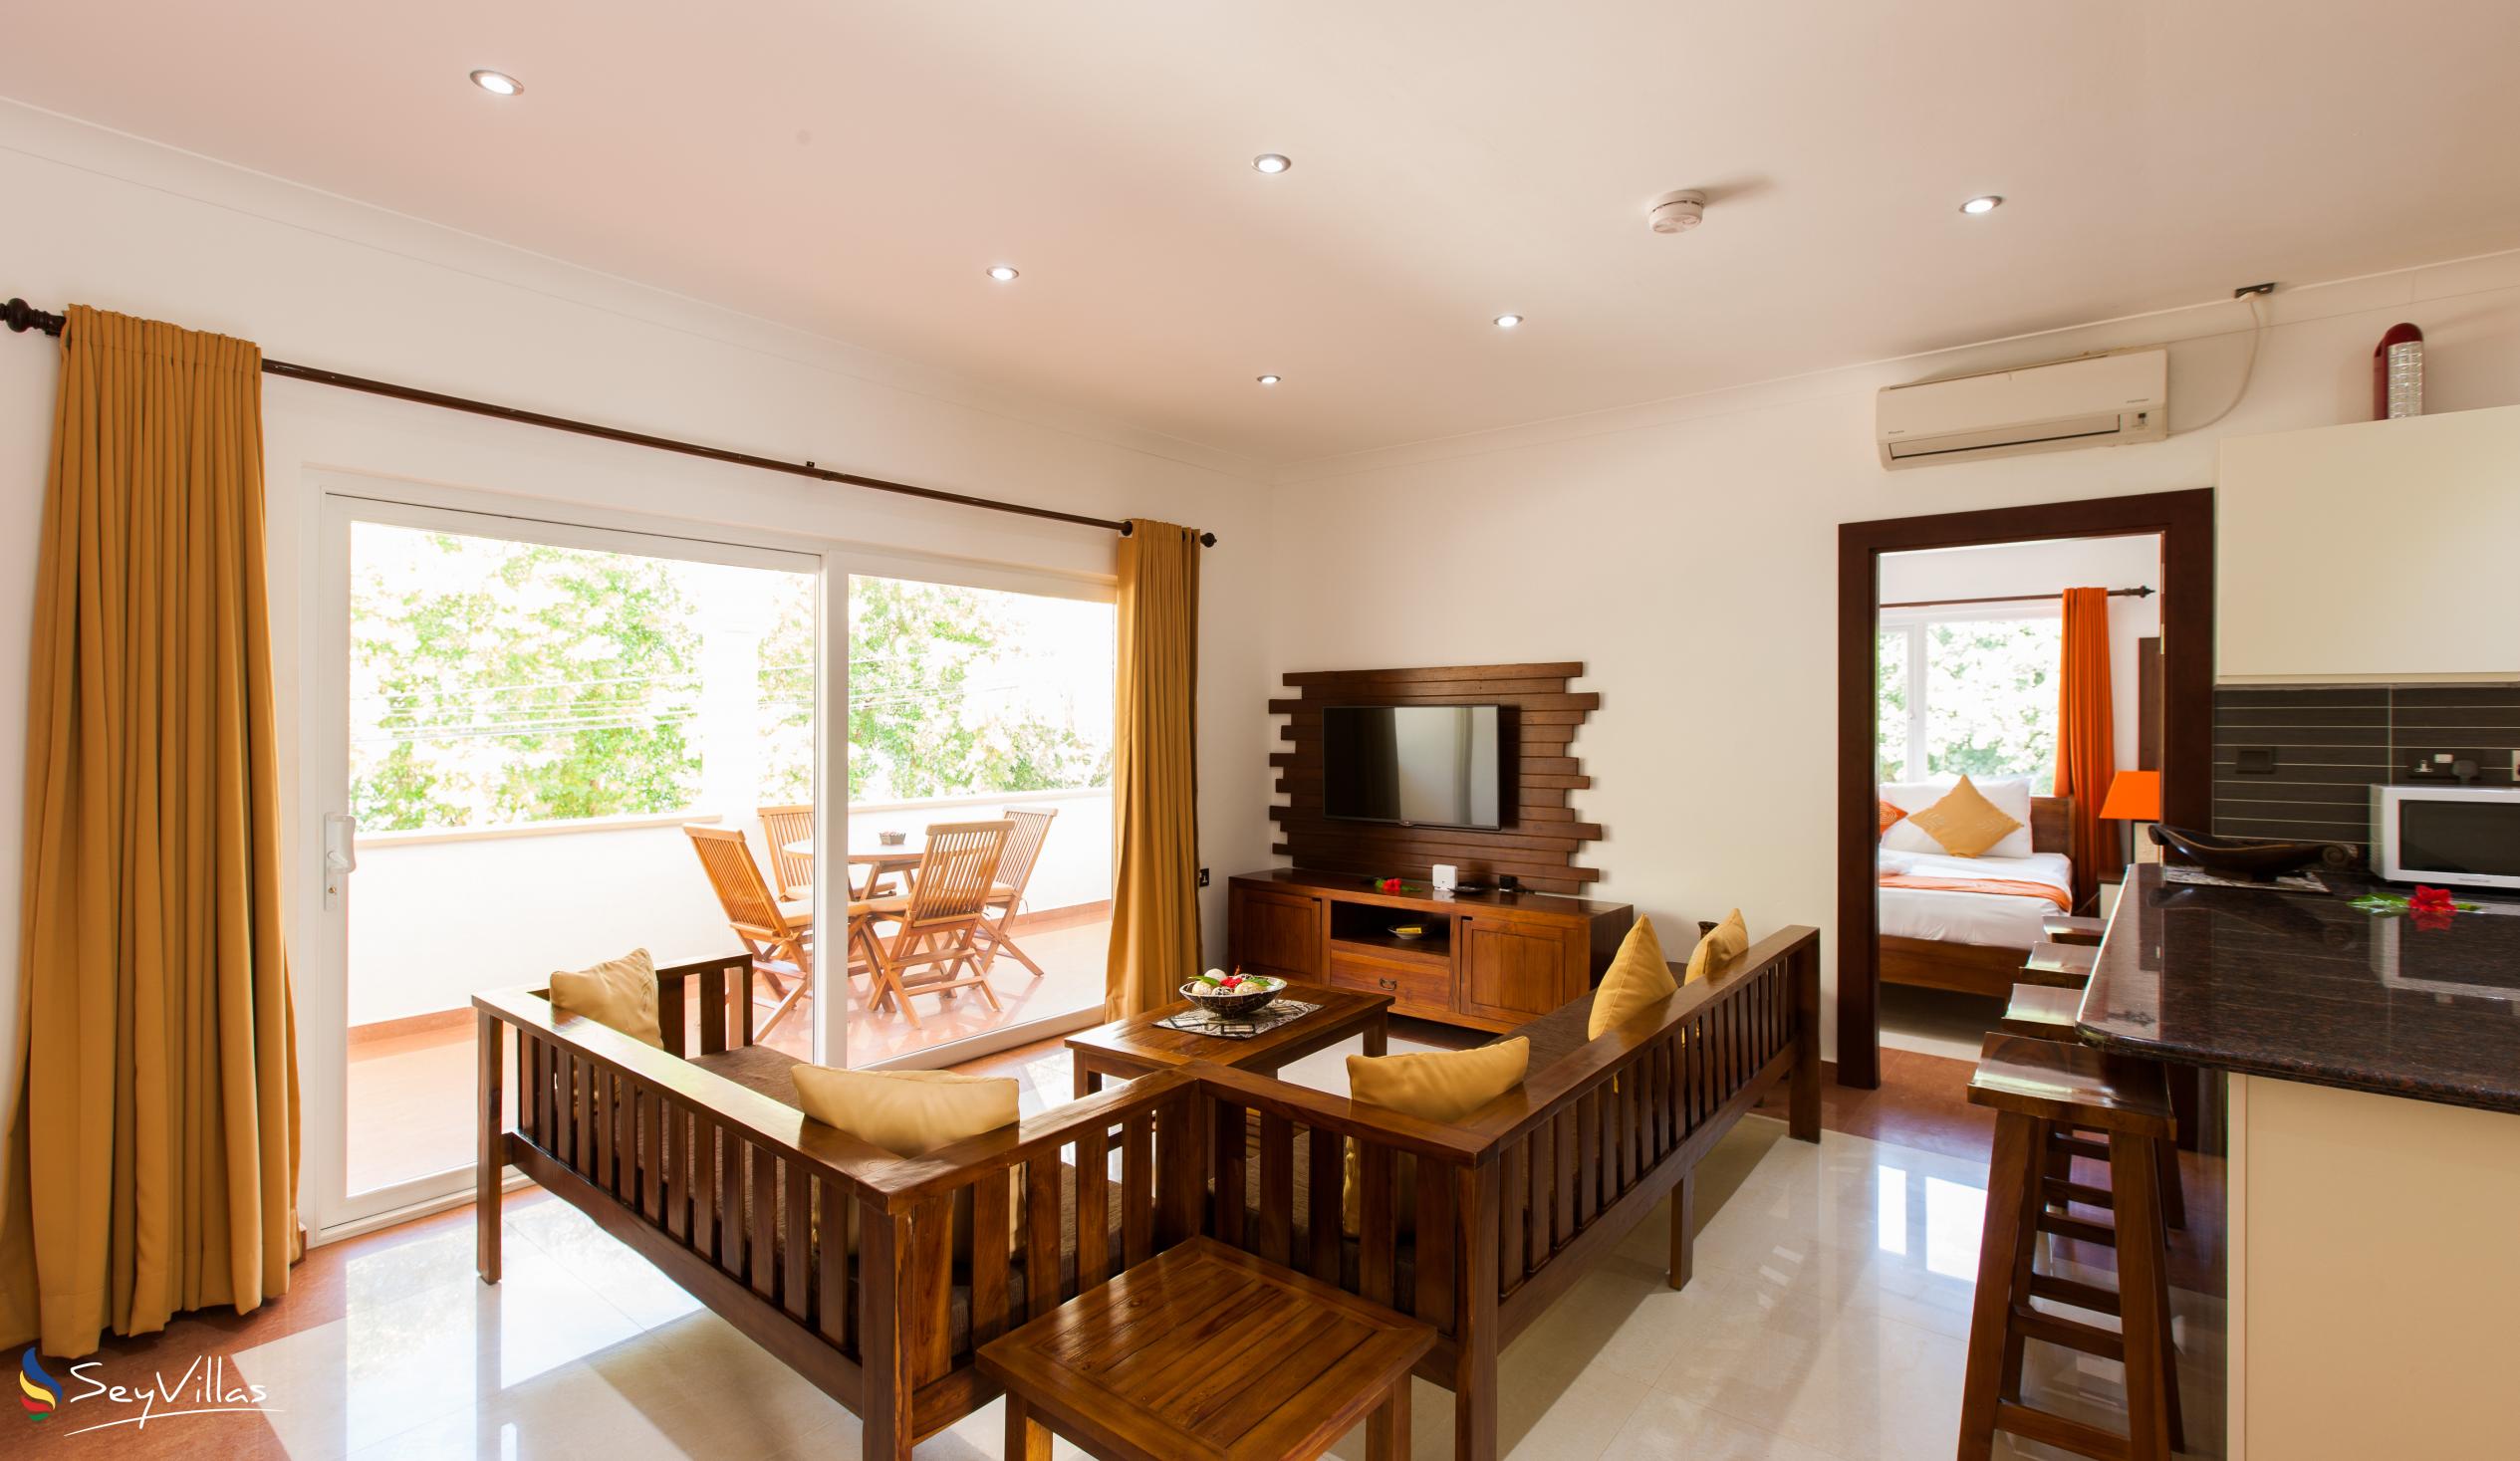 Foto 95: YASAD Luxury Beach Residence - Appartement 3 chambres Premier Etage - Praslin (Seychelles)